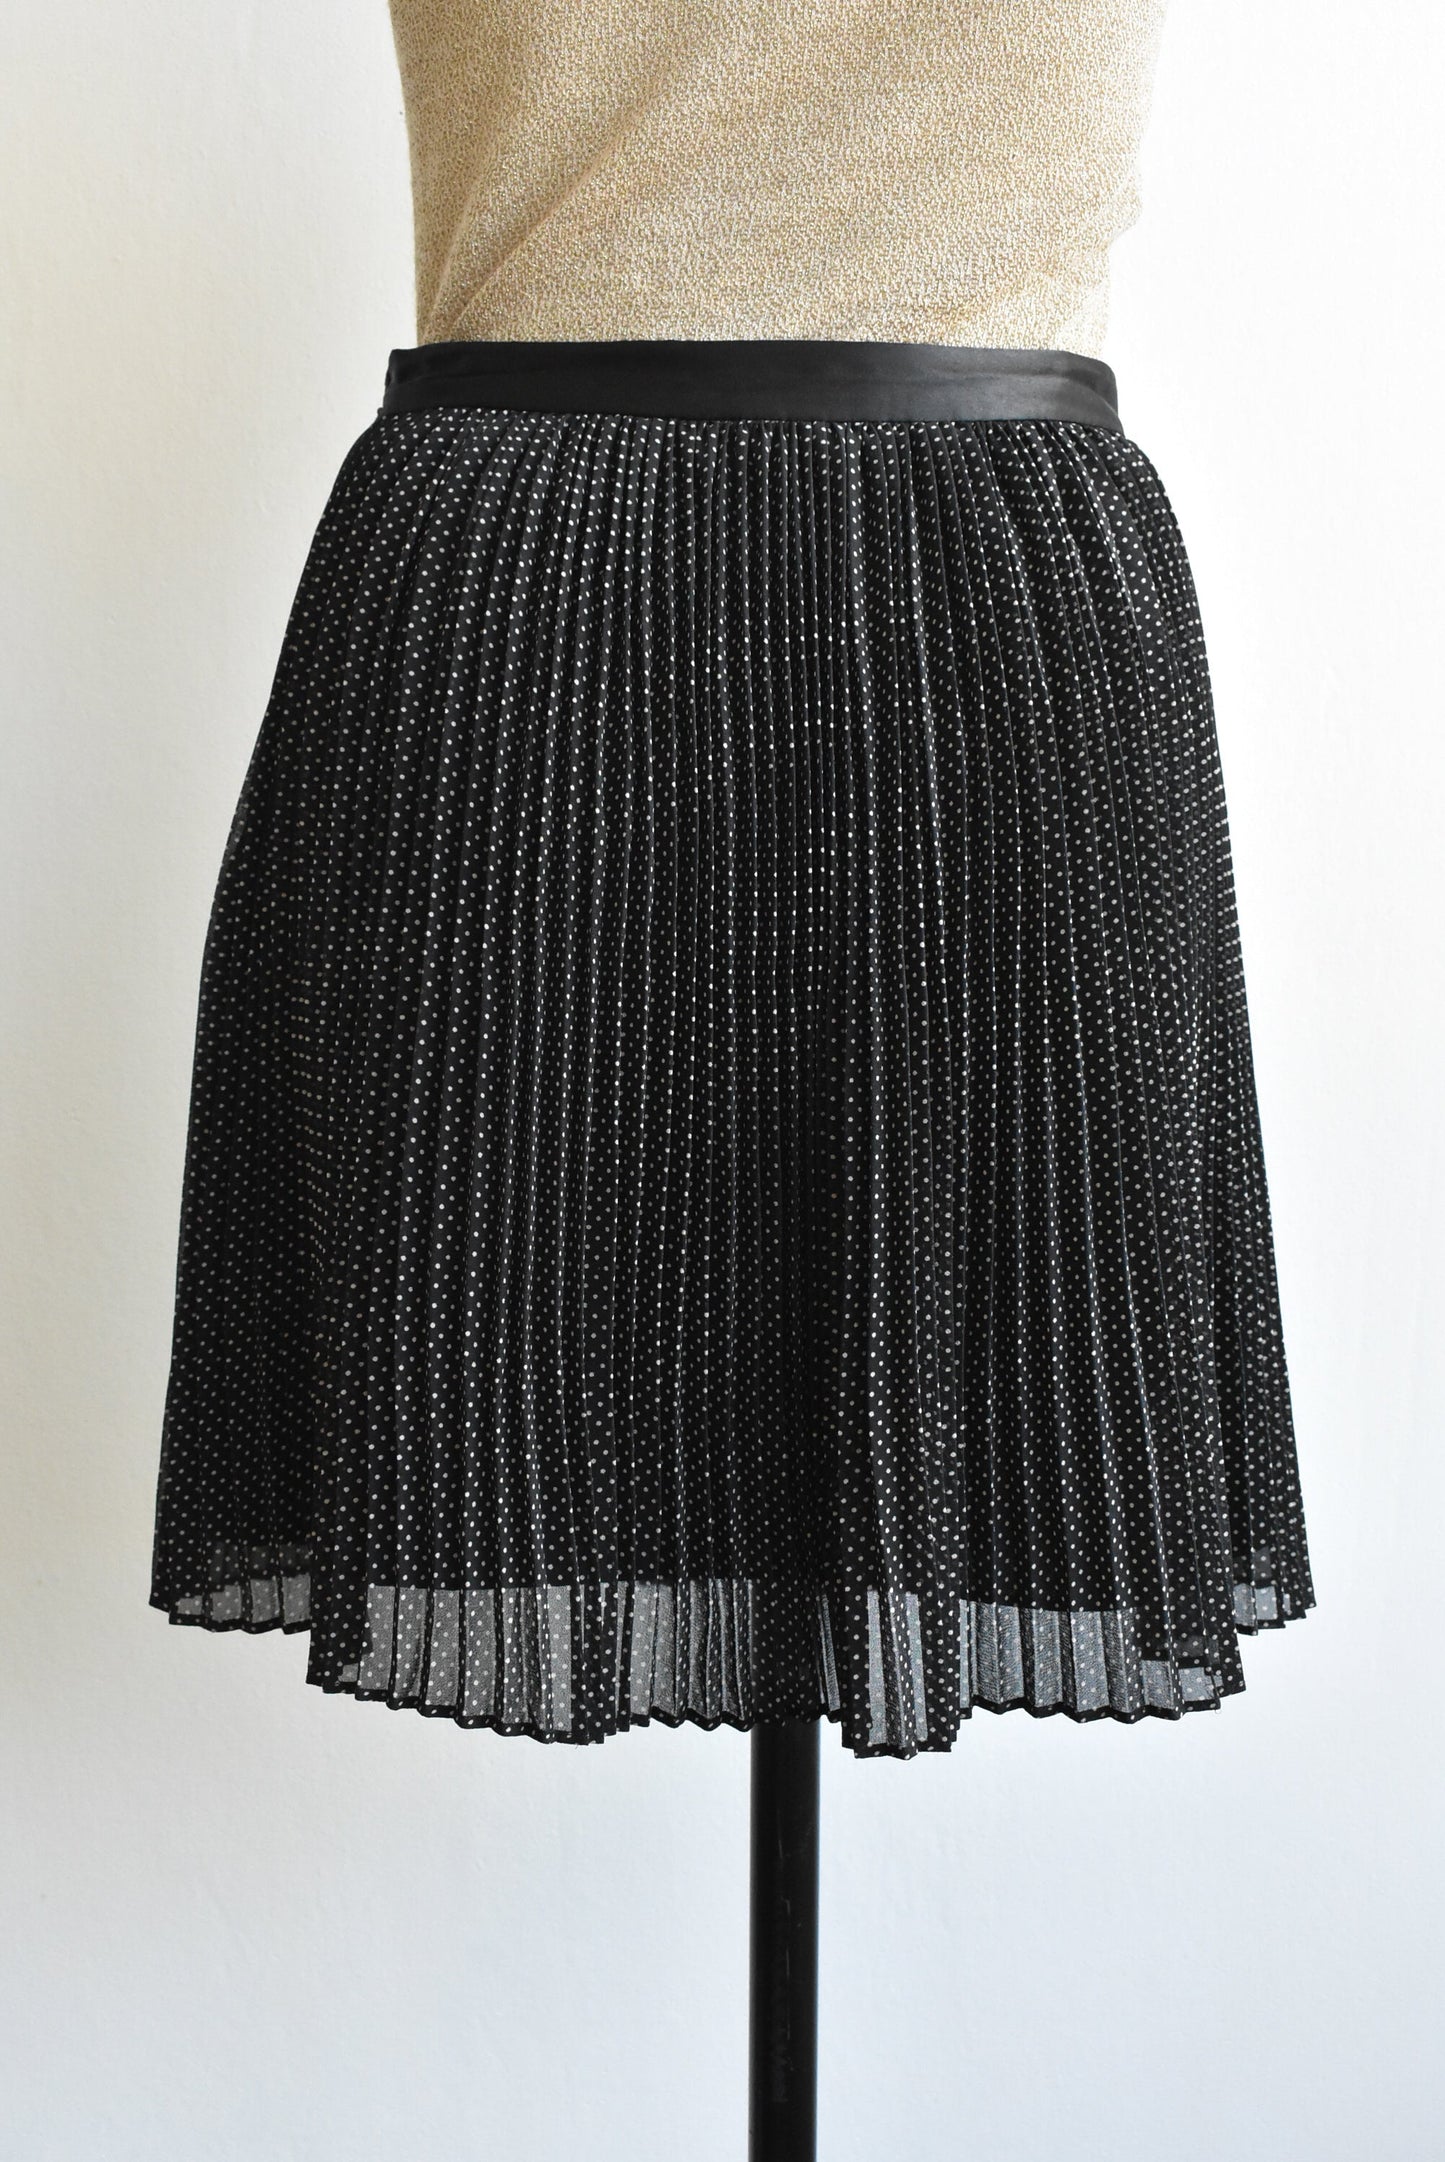 Jack Wills pleated polka dot mini-skirt, size 8